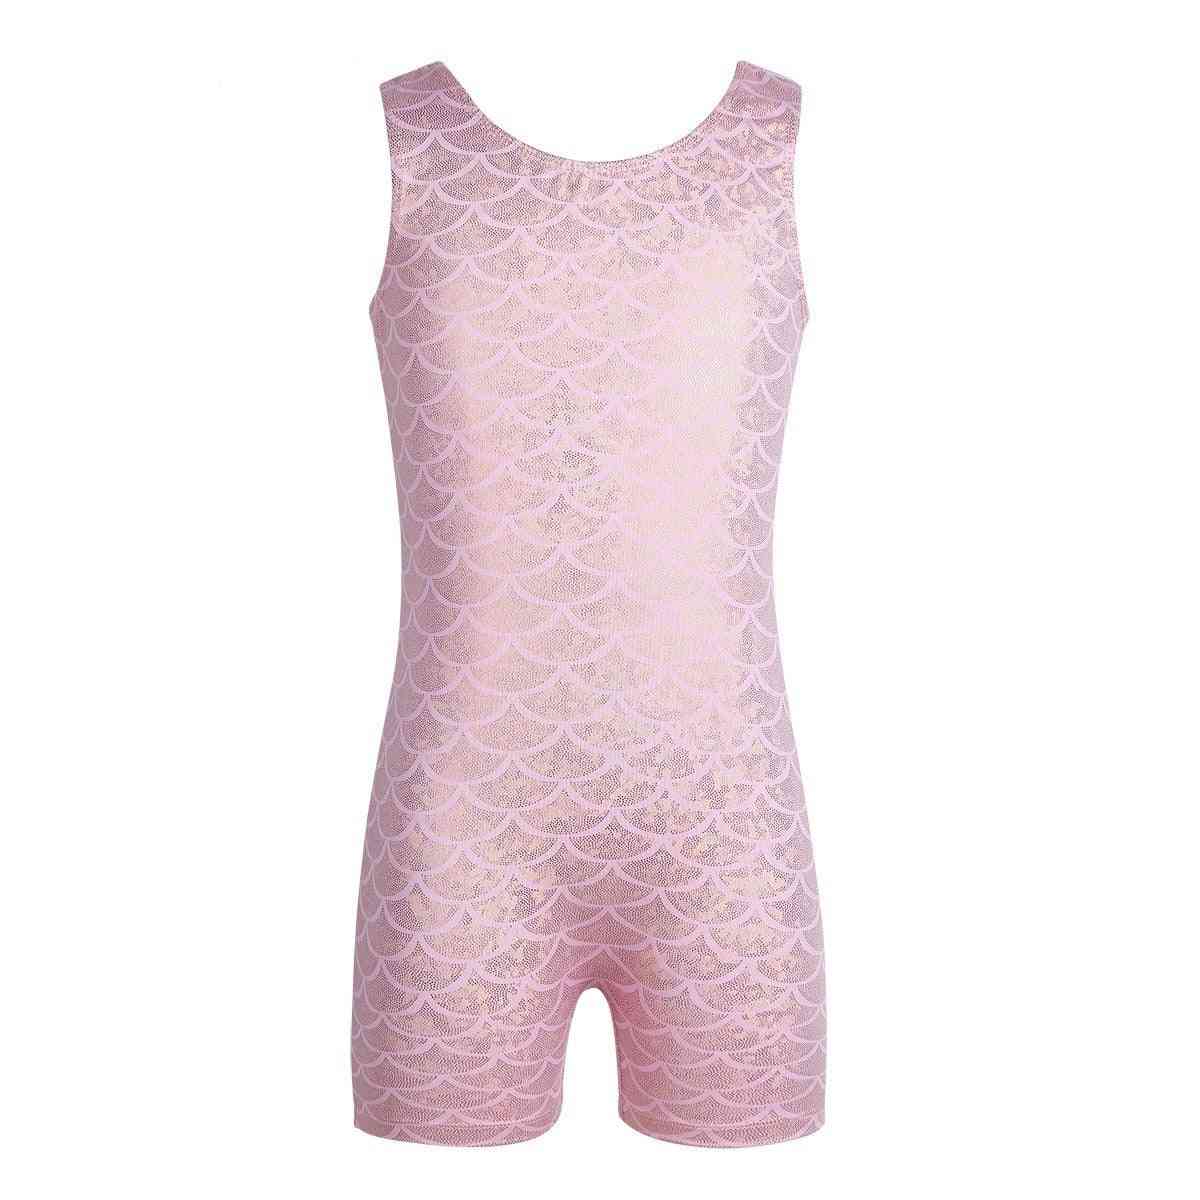 Swimwear Sleeveless Glittery Scales Printed Jumpsuit Dance Wear